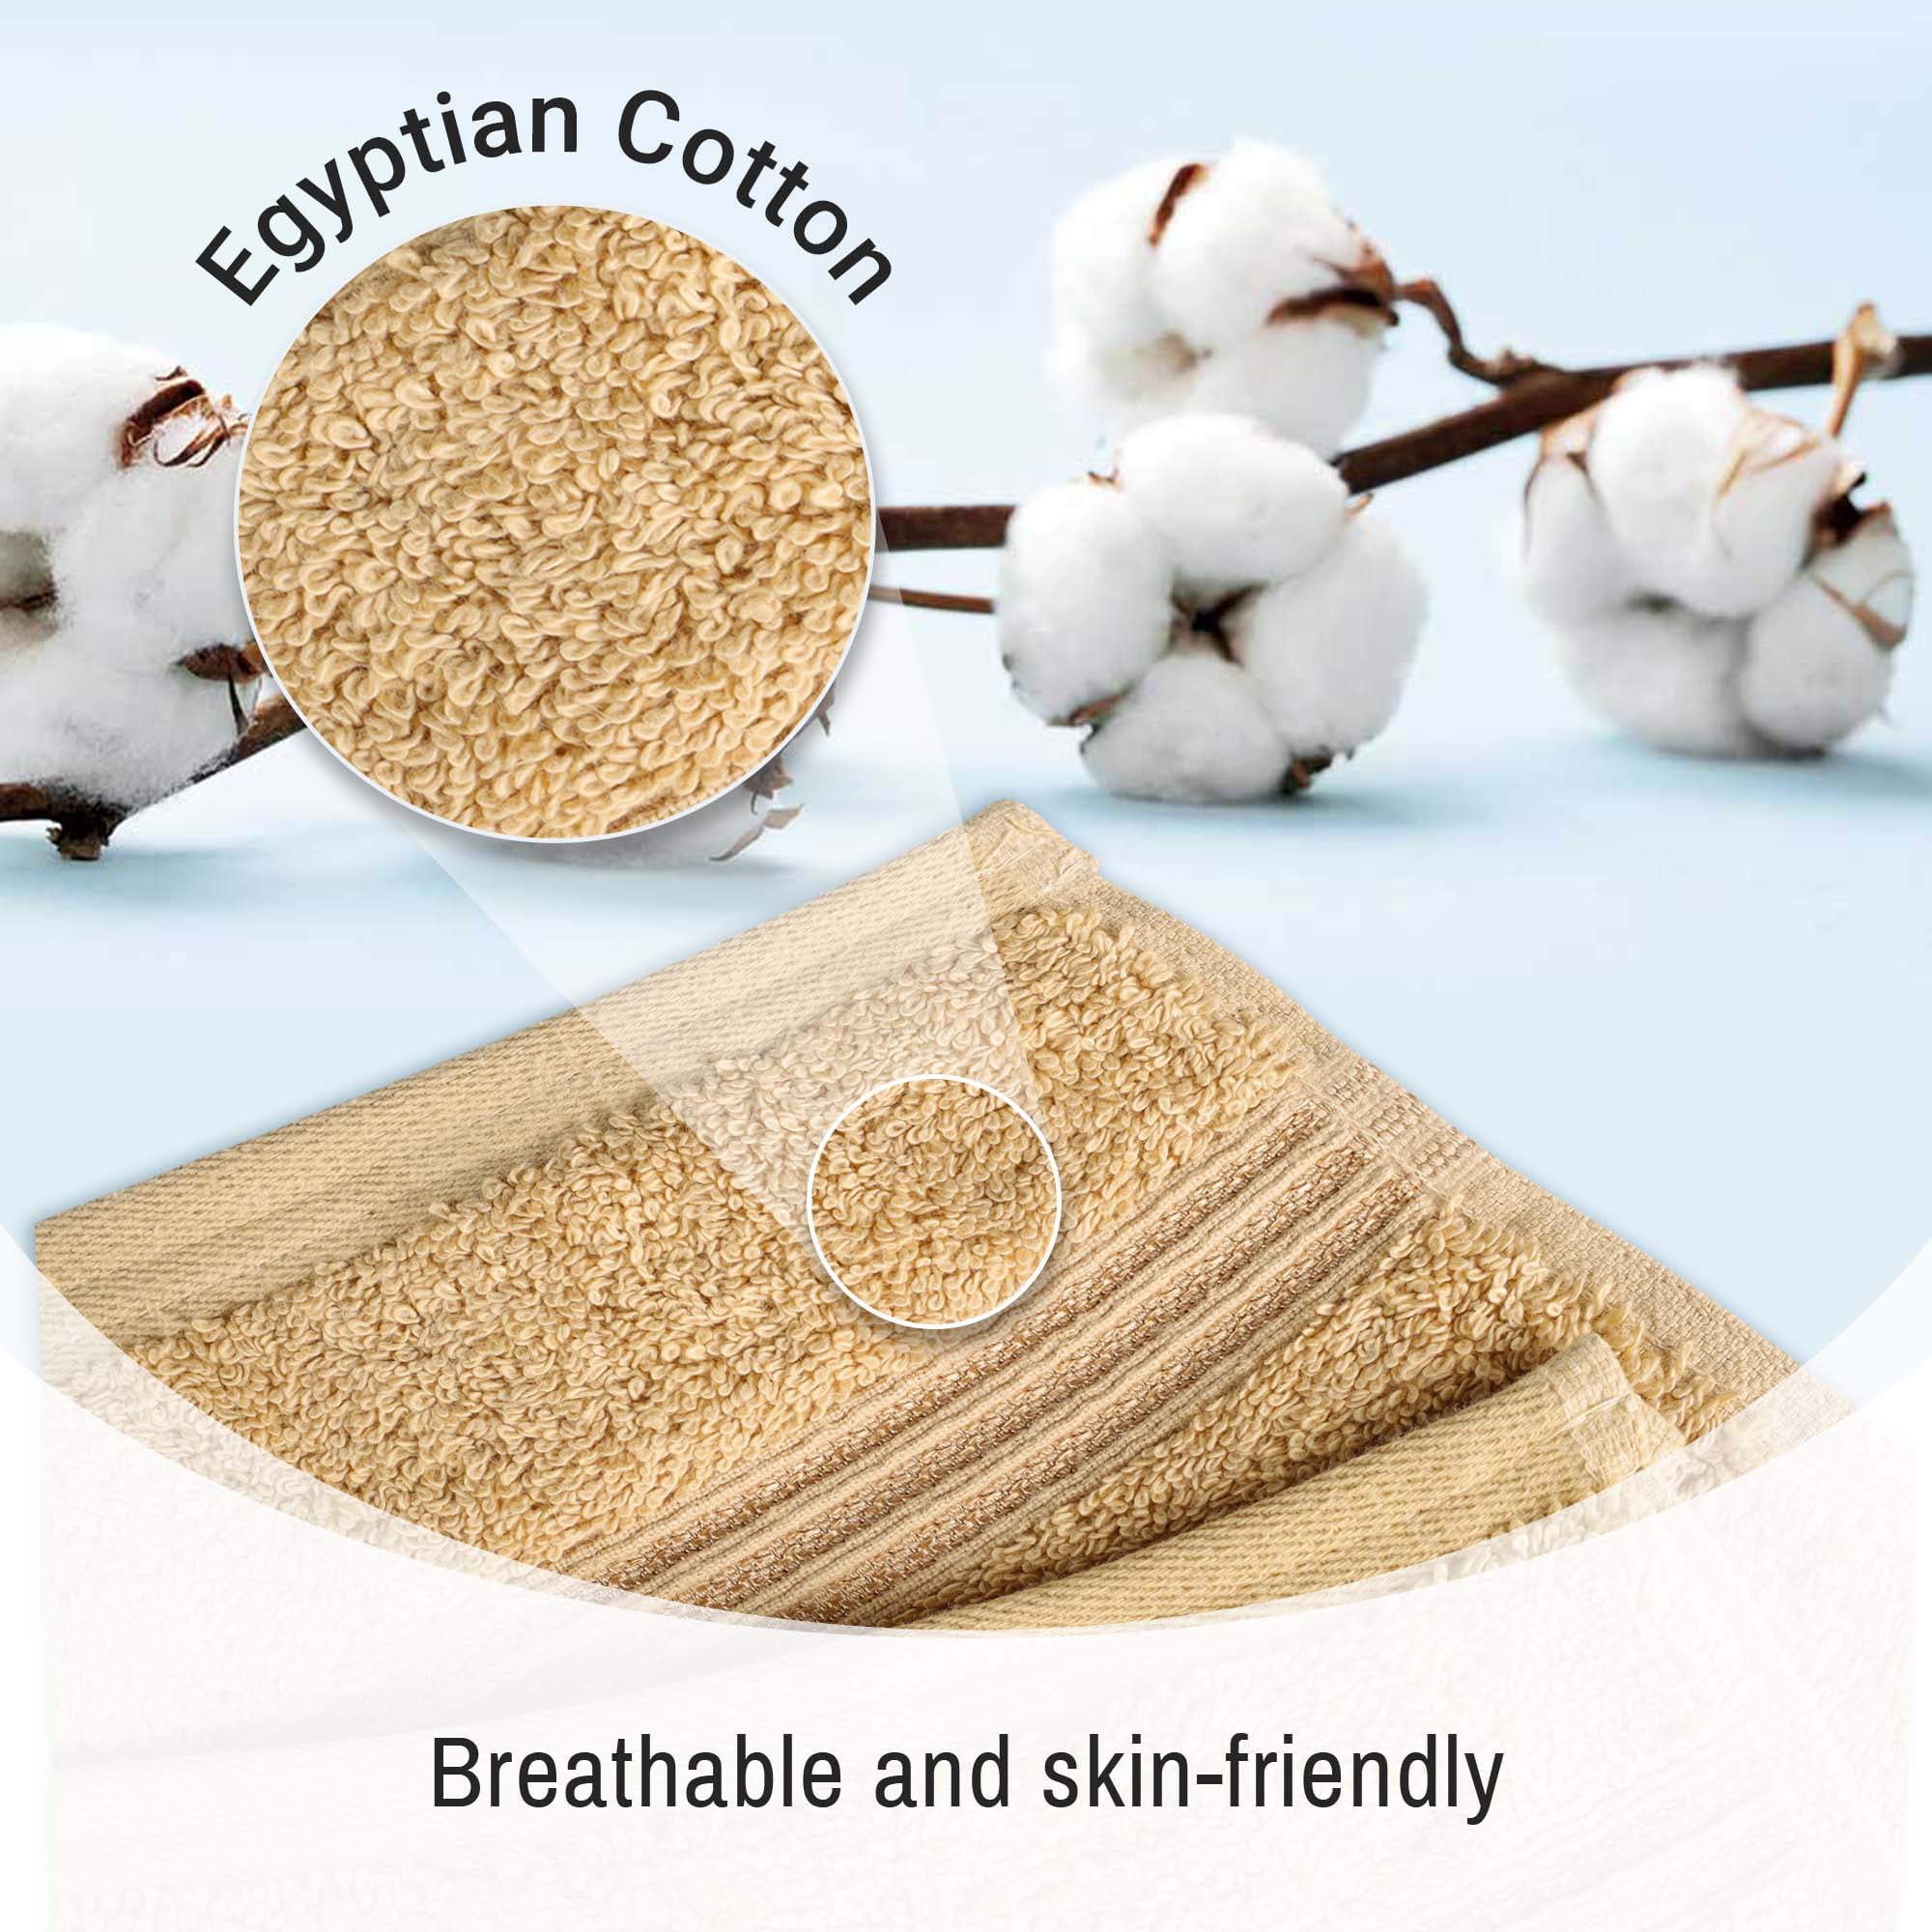 Pinzon by  - Egyptian Cotton Hand Towel 50x100cm, 600gr/m2 -  Bulgaria, New - The wholesale platform